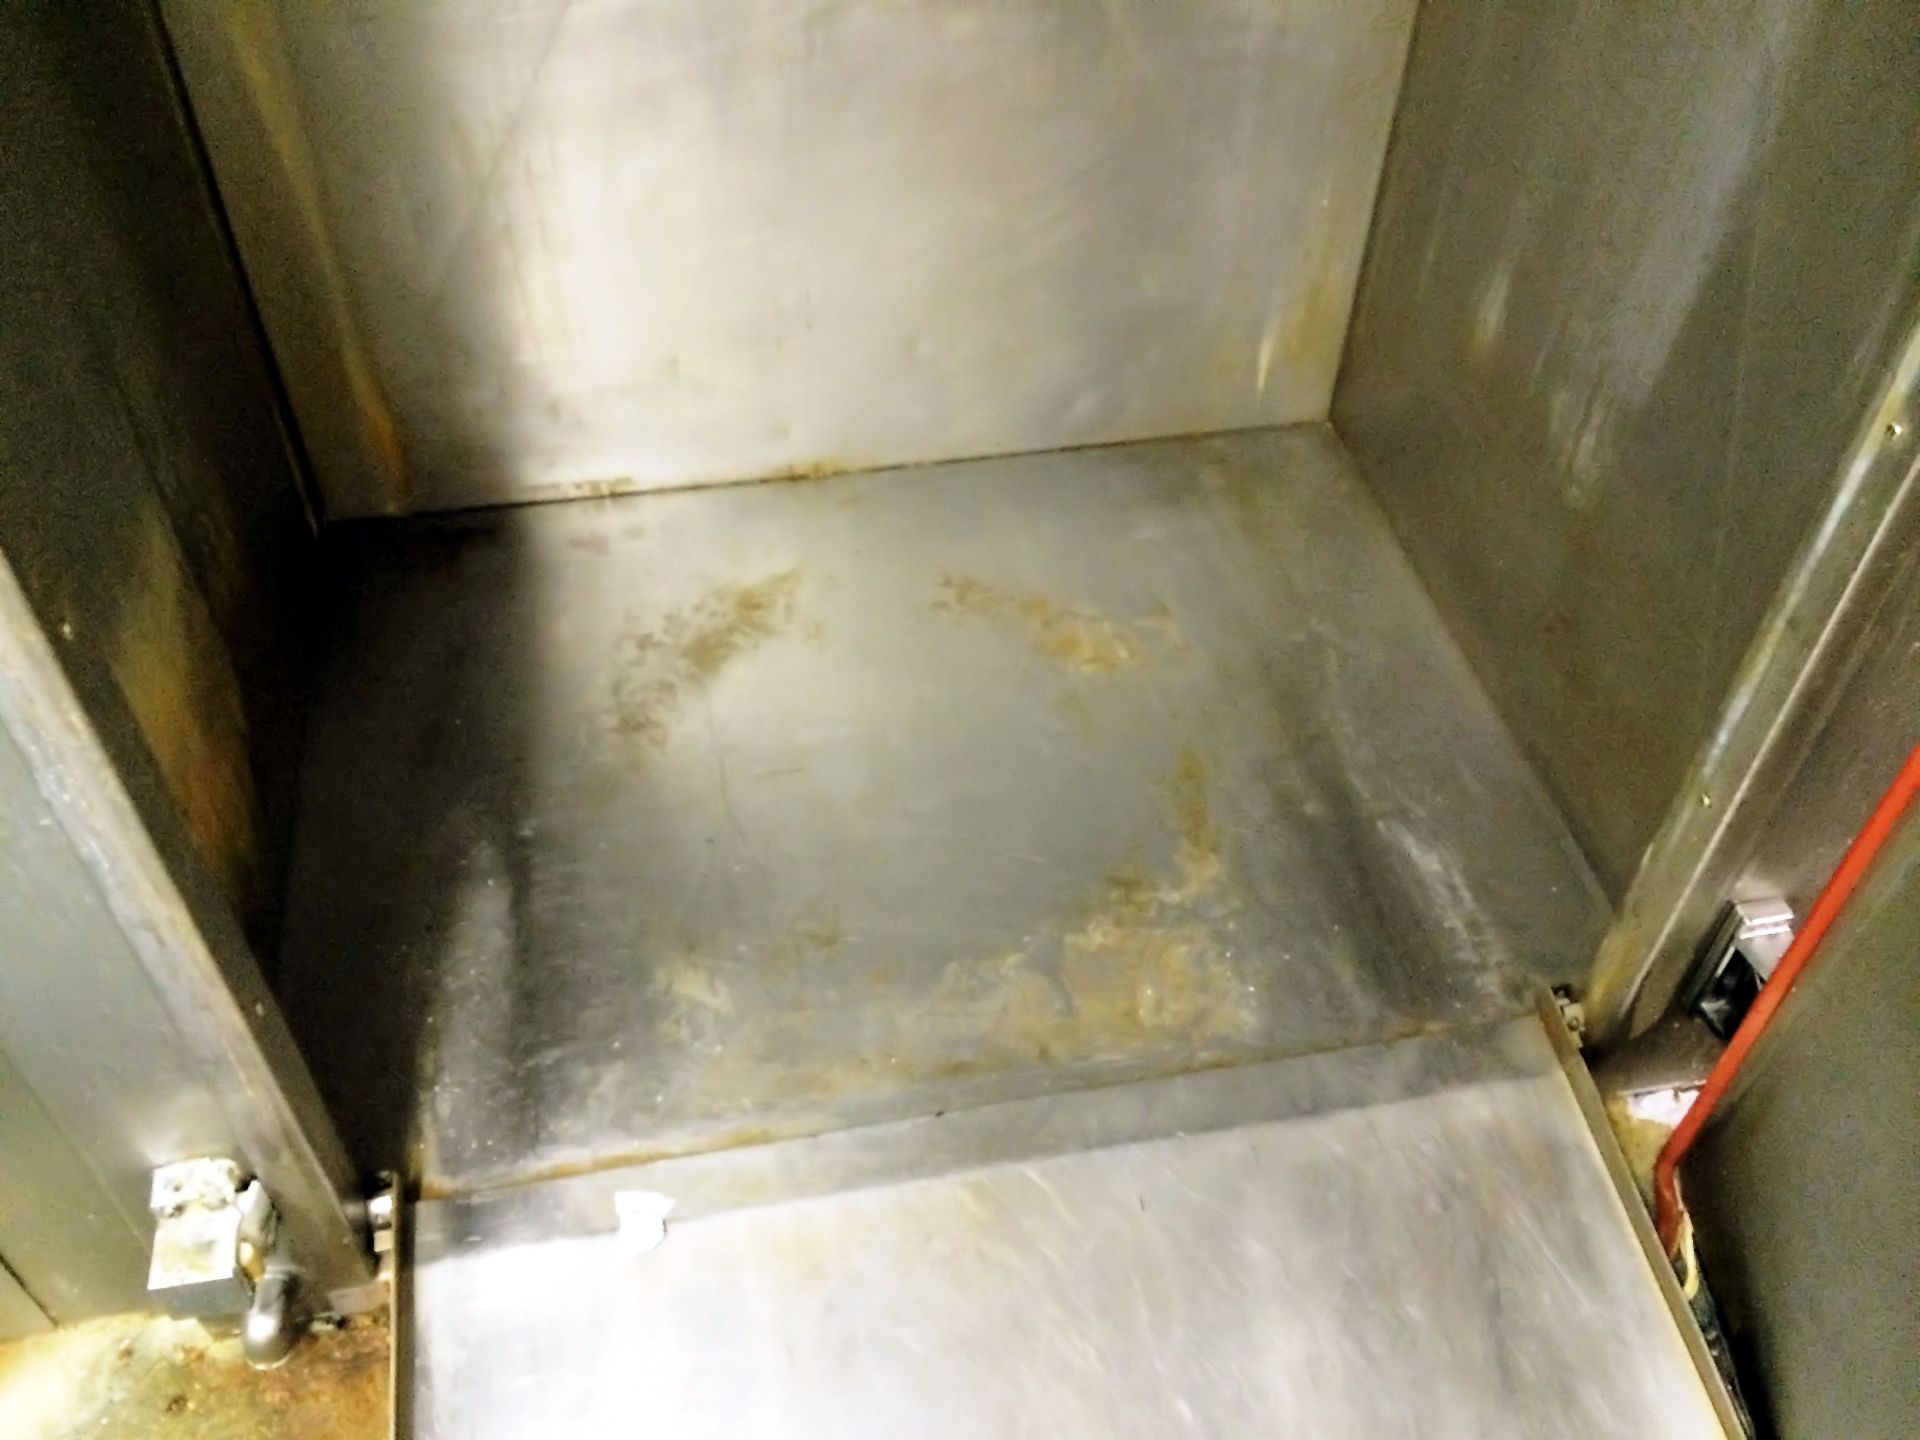 Bastramat commercial self generating steam walk-in oven Chamber size: 110cm L x 95cm D x 175cm H - Image 4 of 5